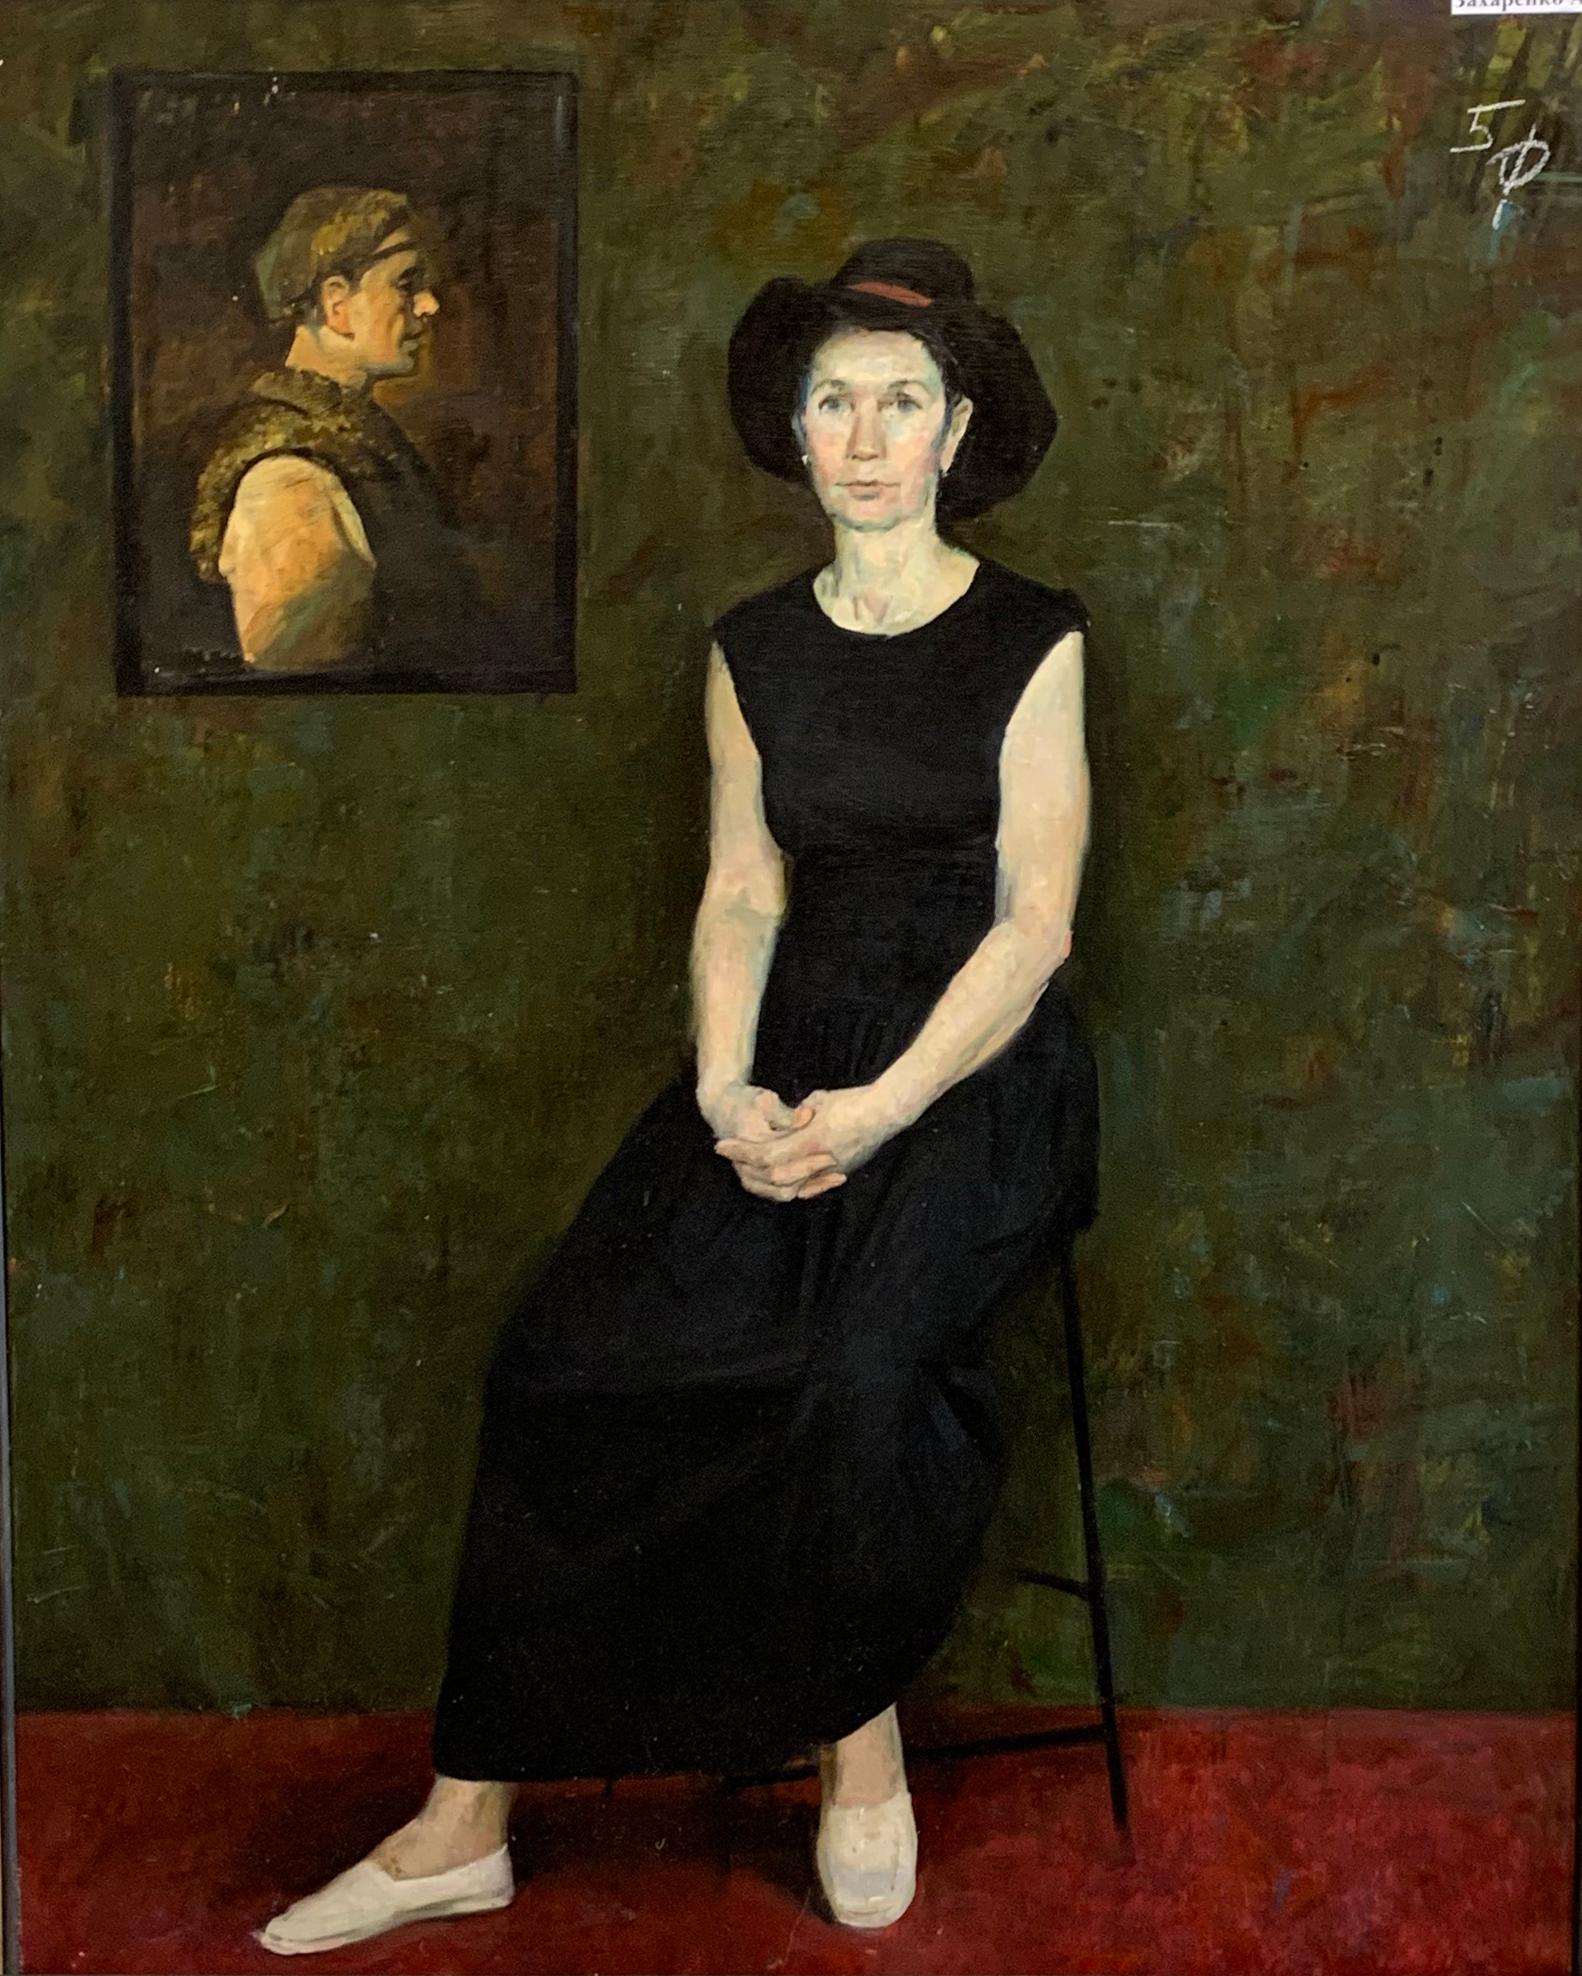 Захаренко A. Original modern art painting